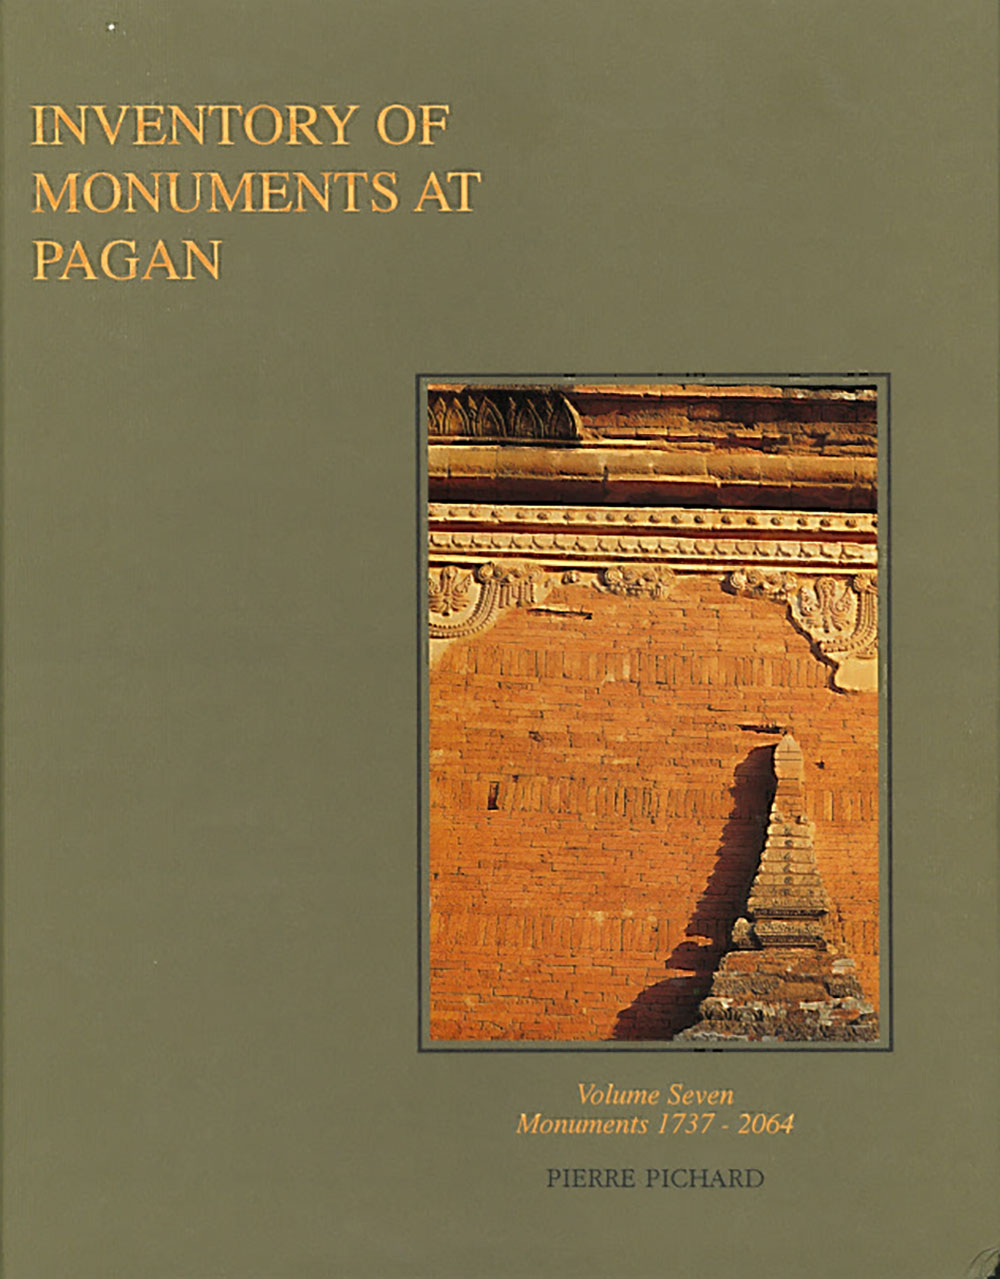 Inventory of monuments at Pagan = Pu gaṁ rheʺ hoṅʿʺ ʾa chokʿ ʾa um ̣myaʺ ʾa kroṅʿʺ ʾa rā cacʿ tamʿʺ